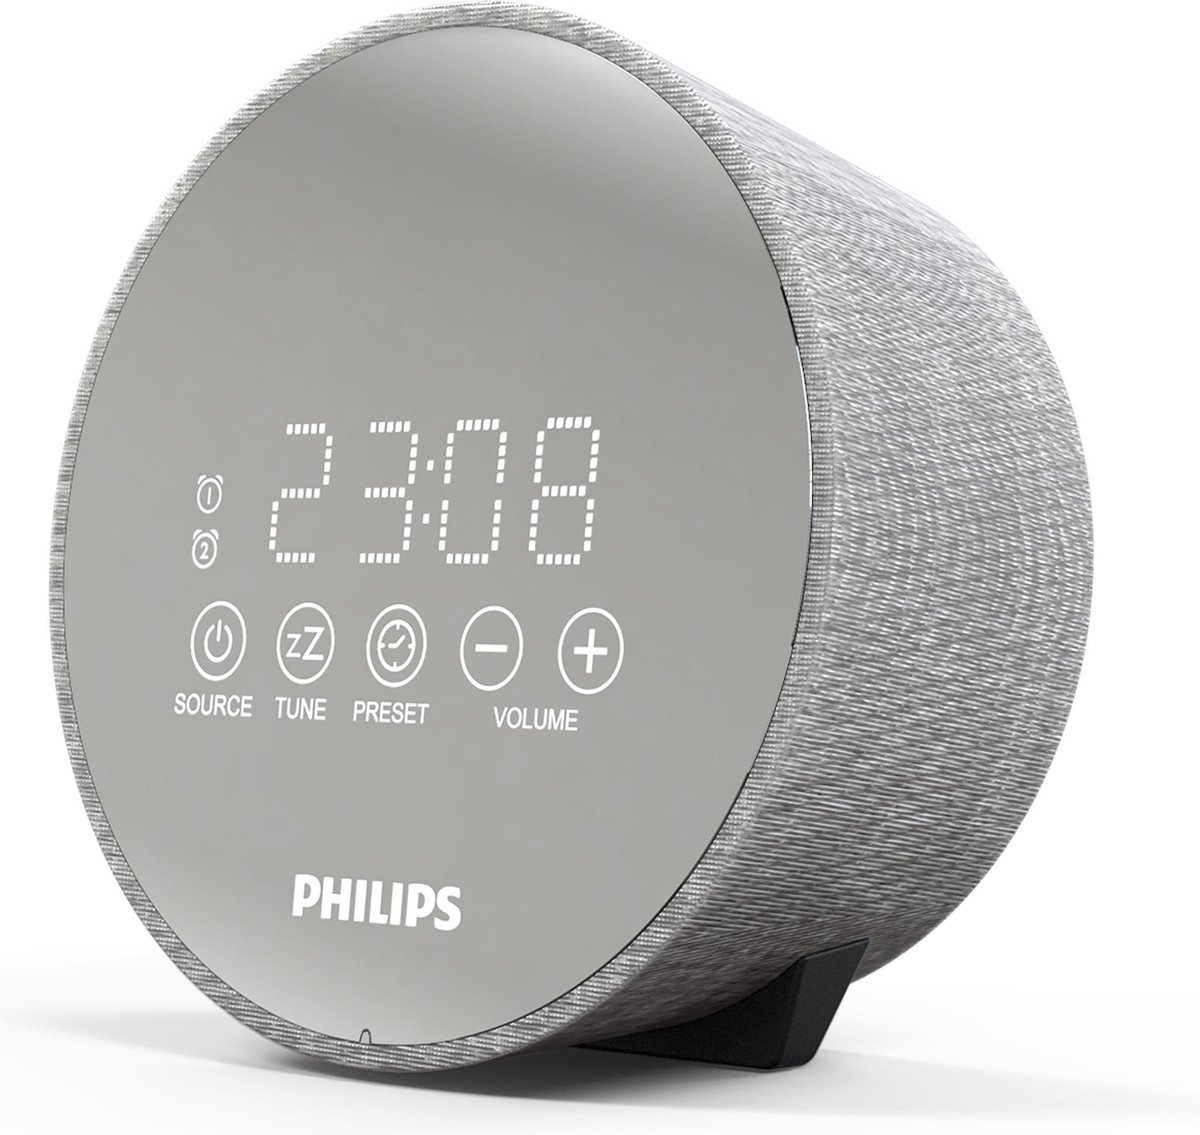 Philips wekkerradio